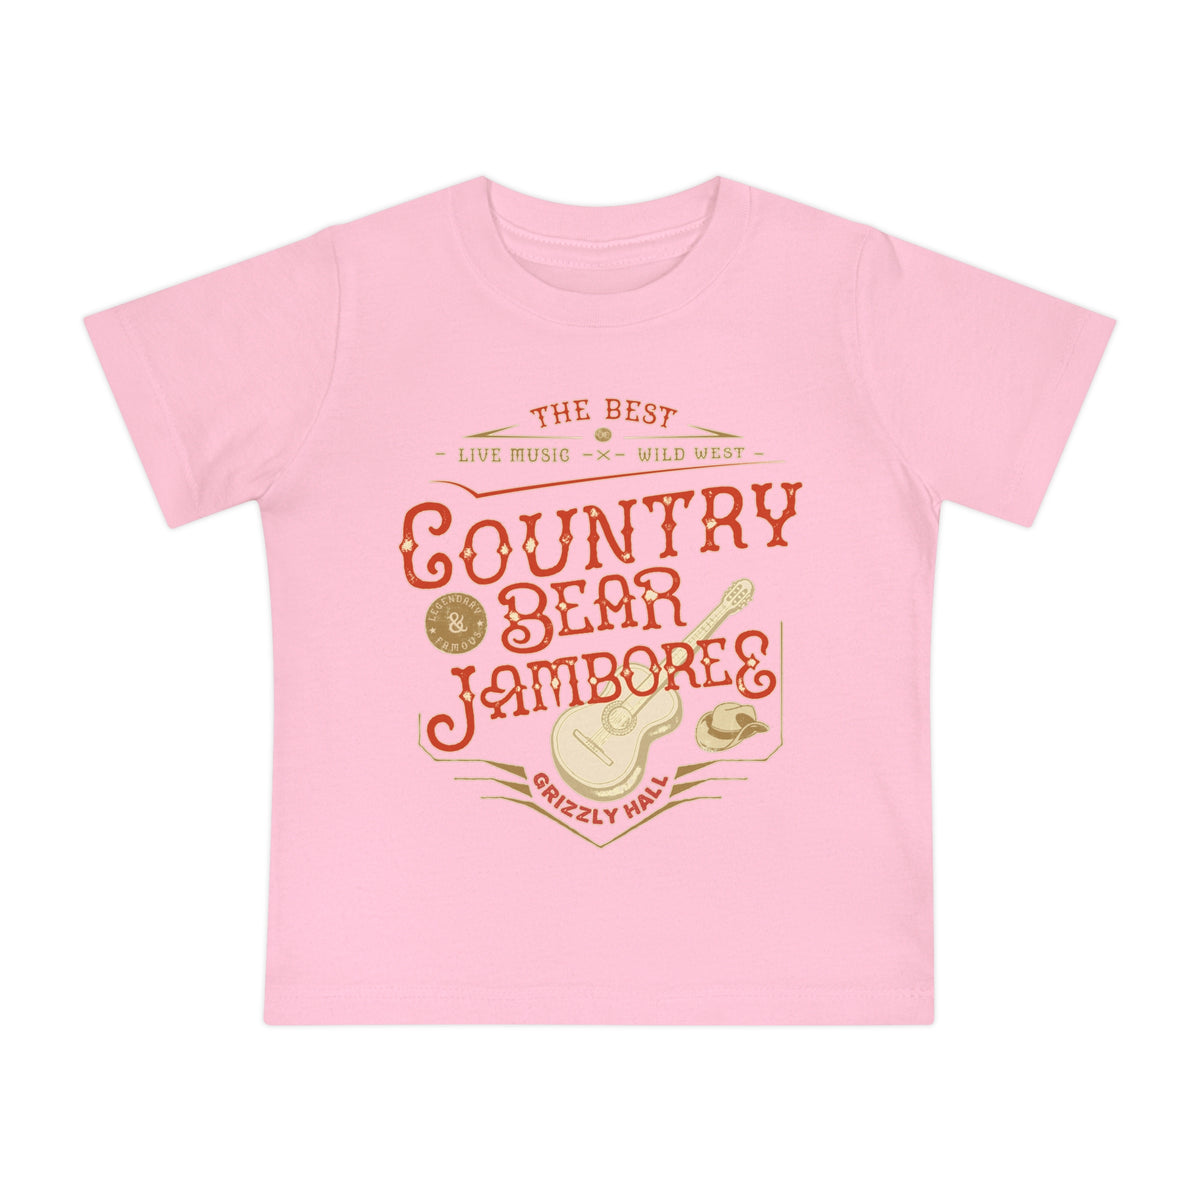 Country Bear Jamboree Bella Canvas Baby Short Sleeve T-Shirt